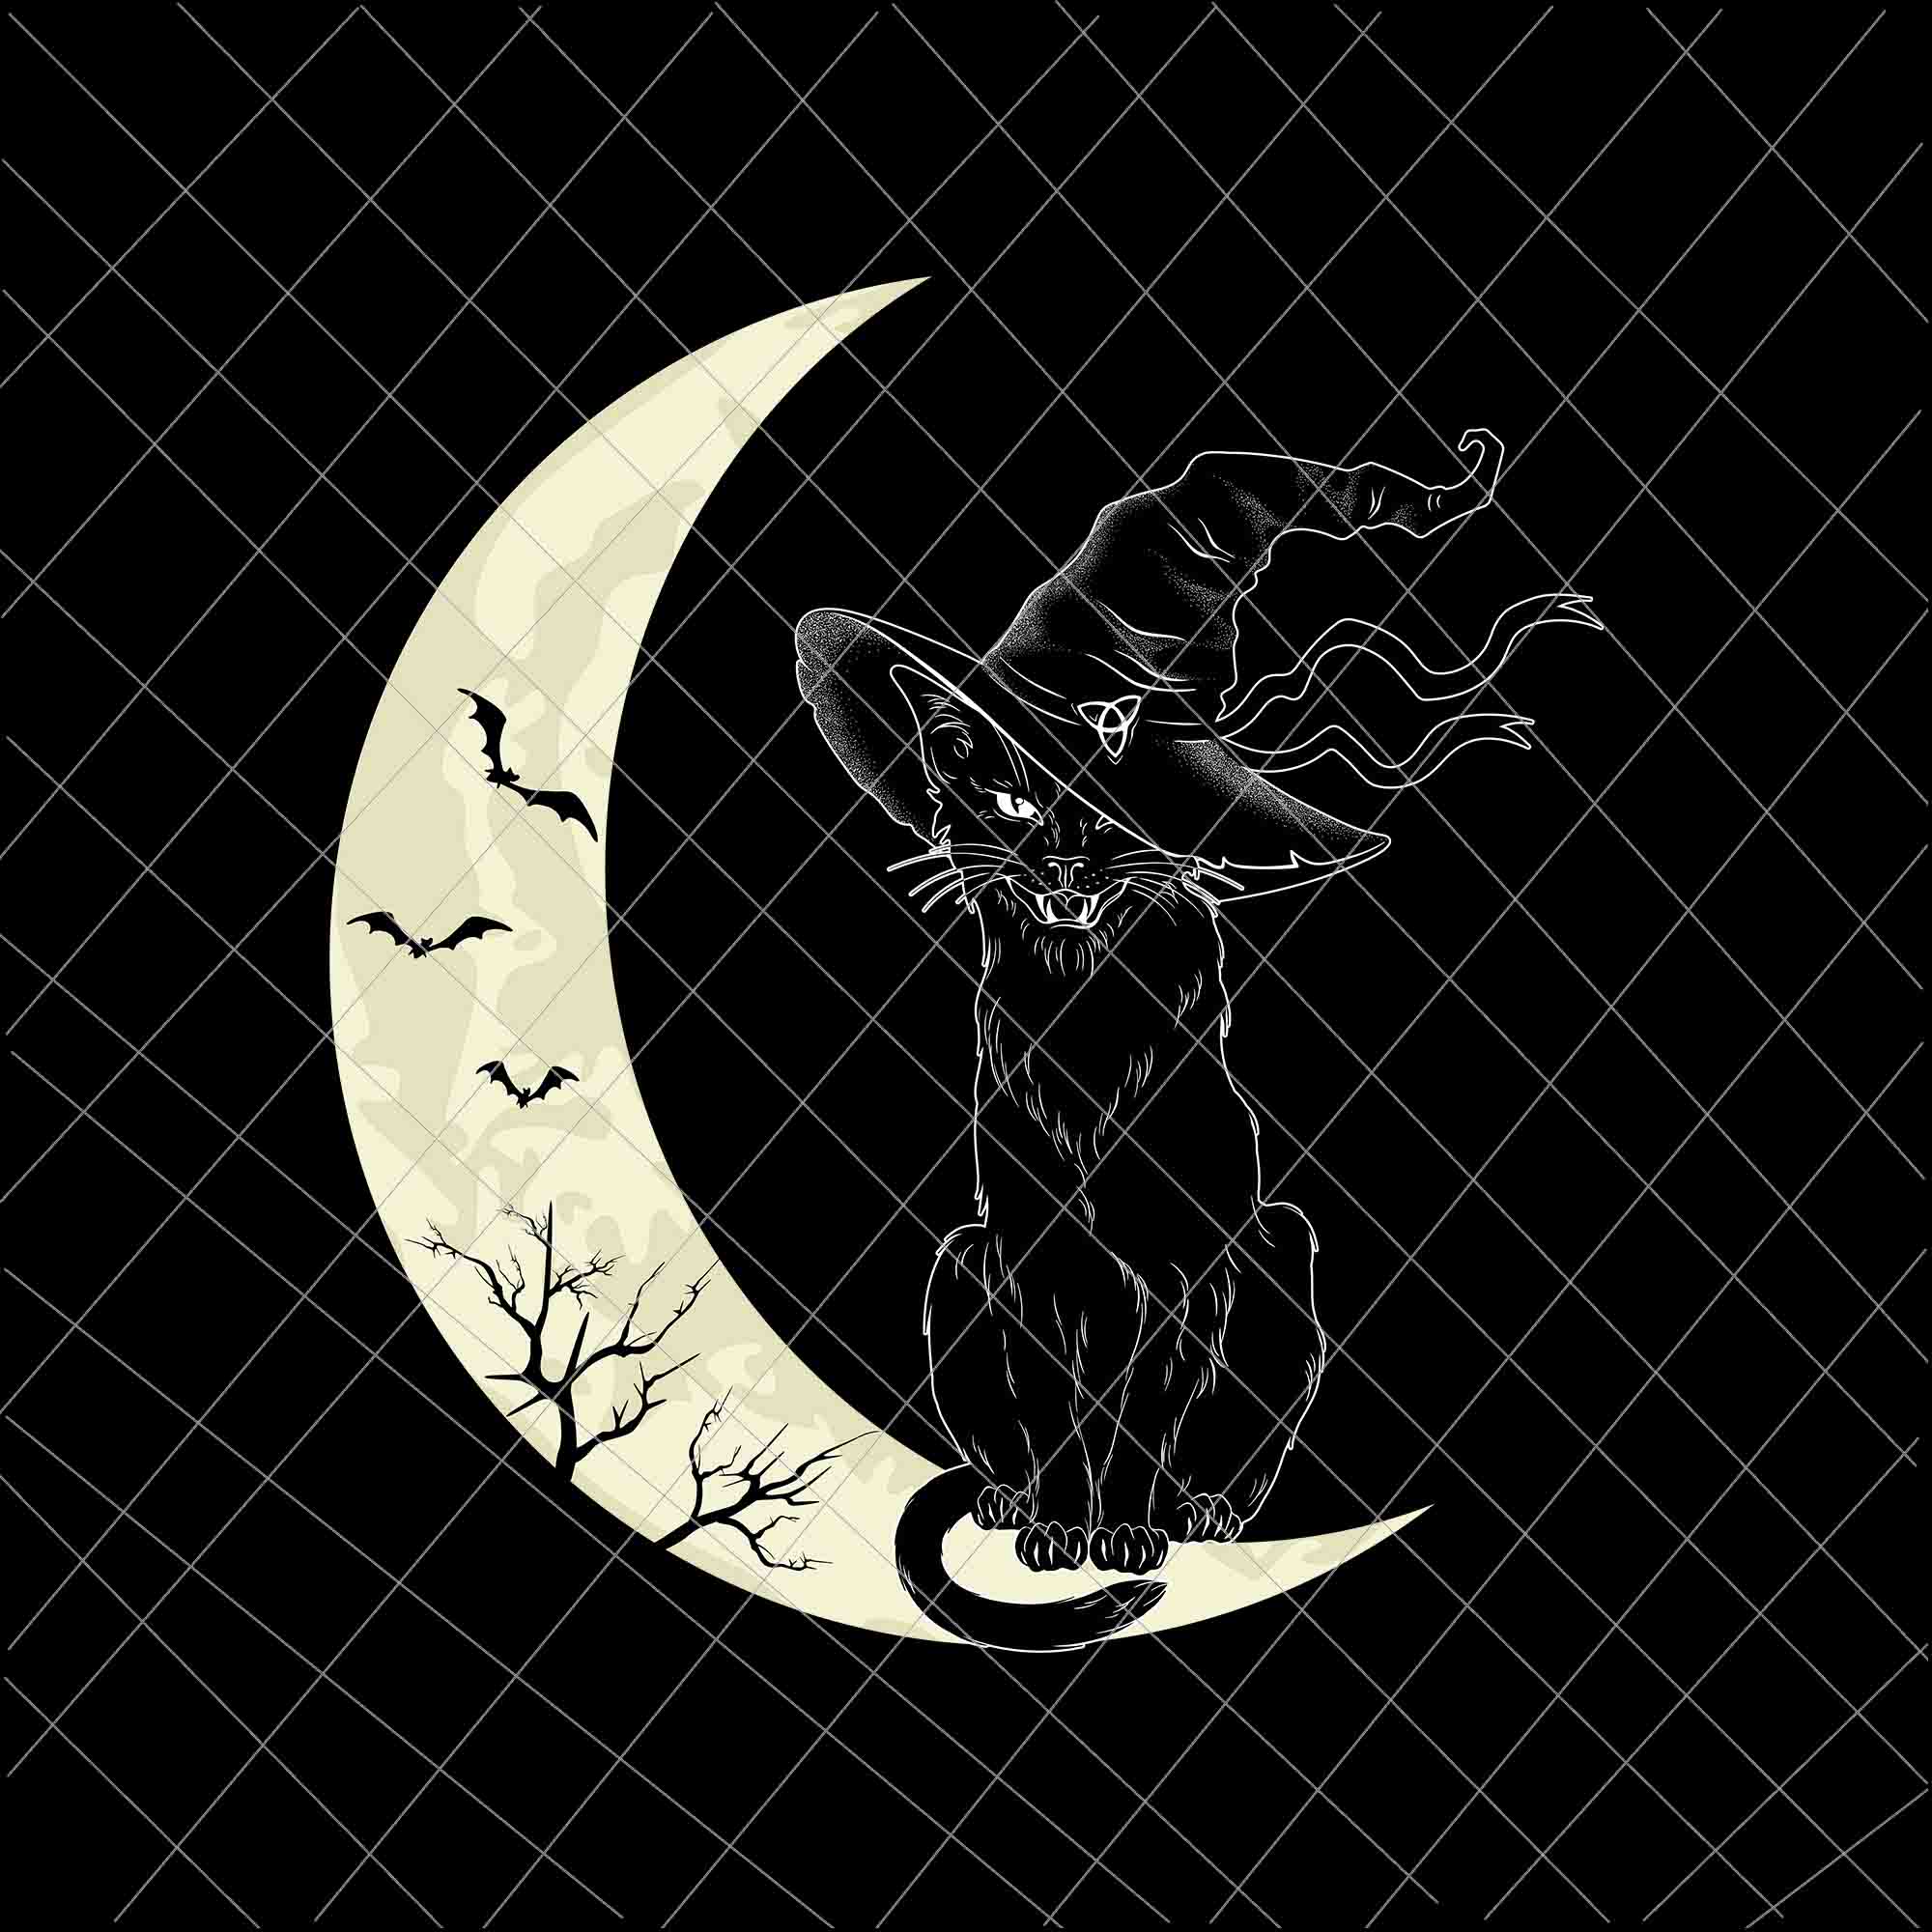 Moon Halloween Scary Black Cat Svg, Black Cat Witch Hat Halloween Svg, Black Cat Halloween Svg, Cat Witch Svg